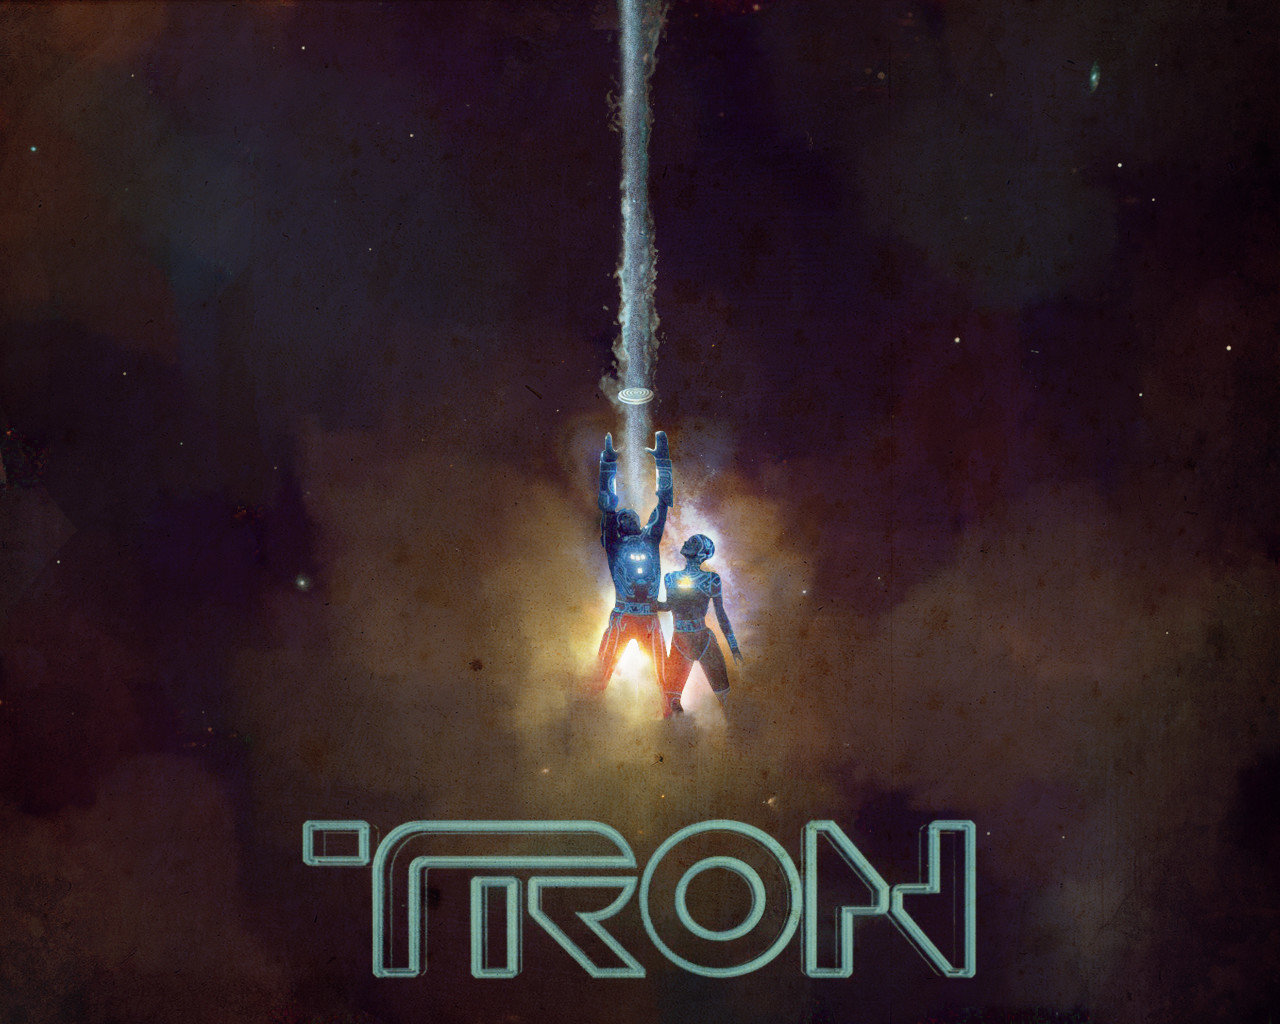 tron legacy game download free